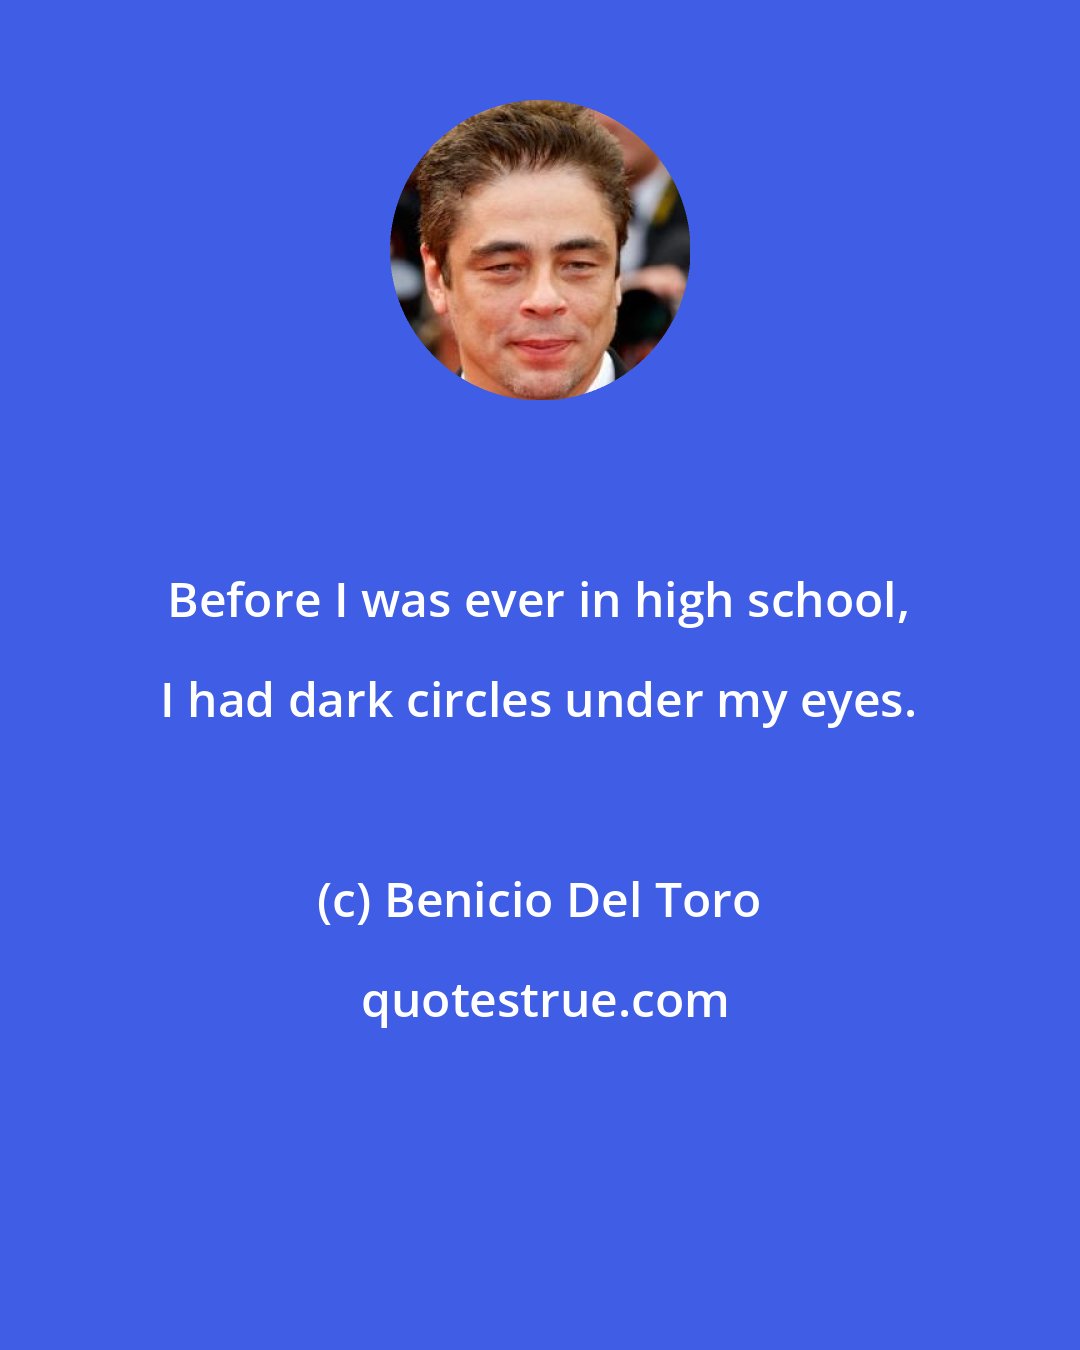 Benicio Del Toro: Before I was ever in high school, I had dark circles under my eyes.